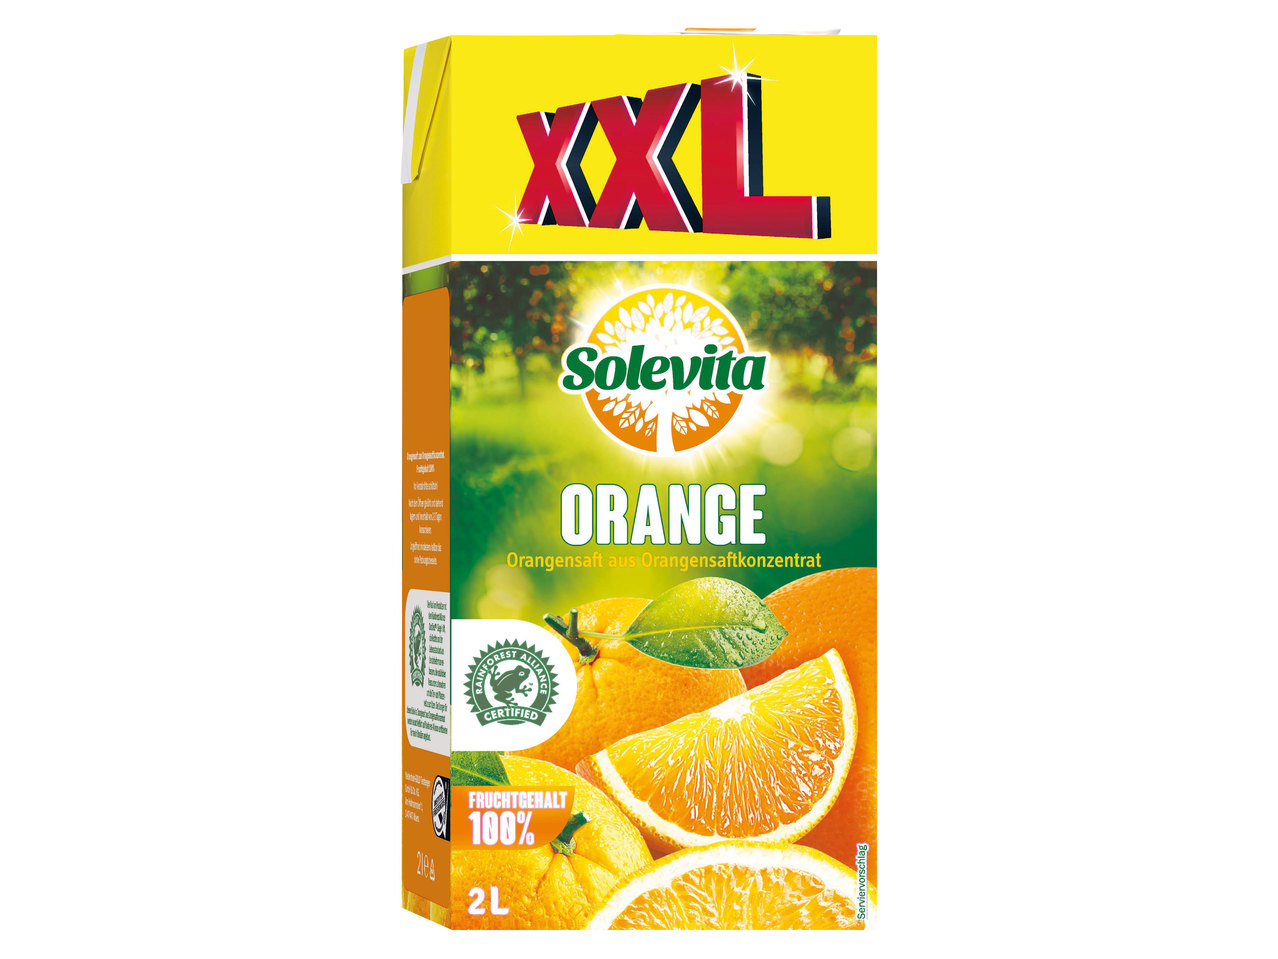 SOLEVITA Orangensaft 2 Liter